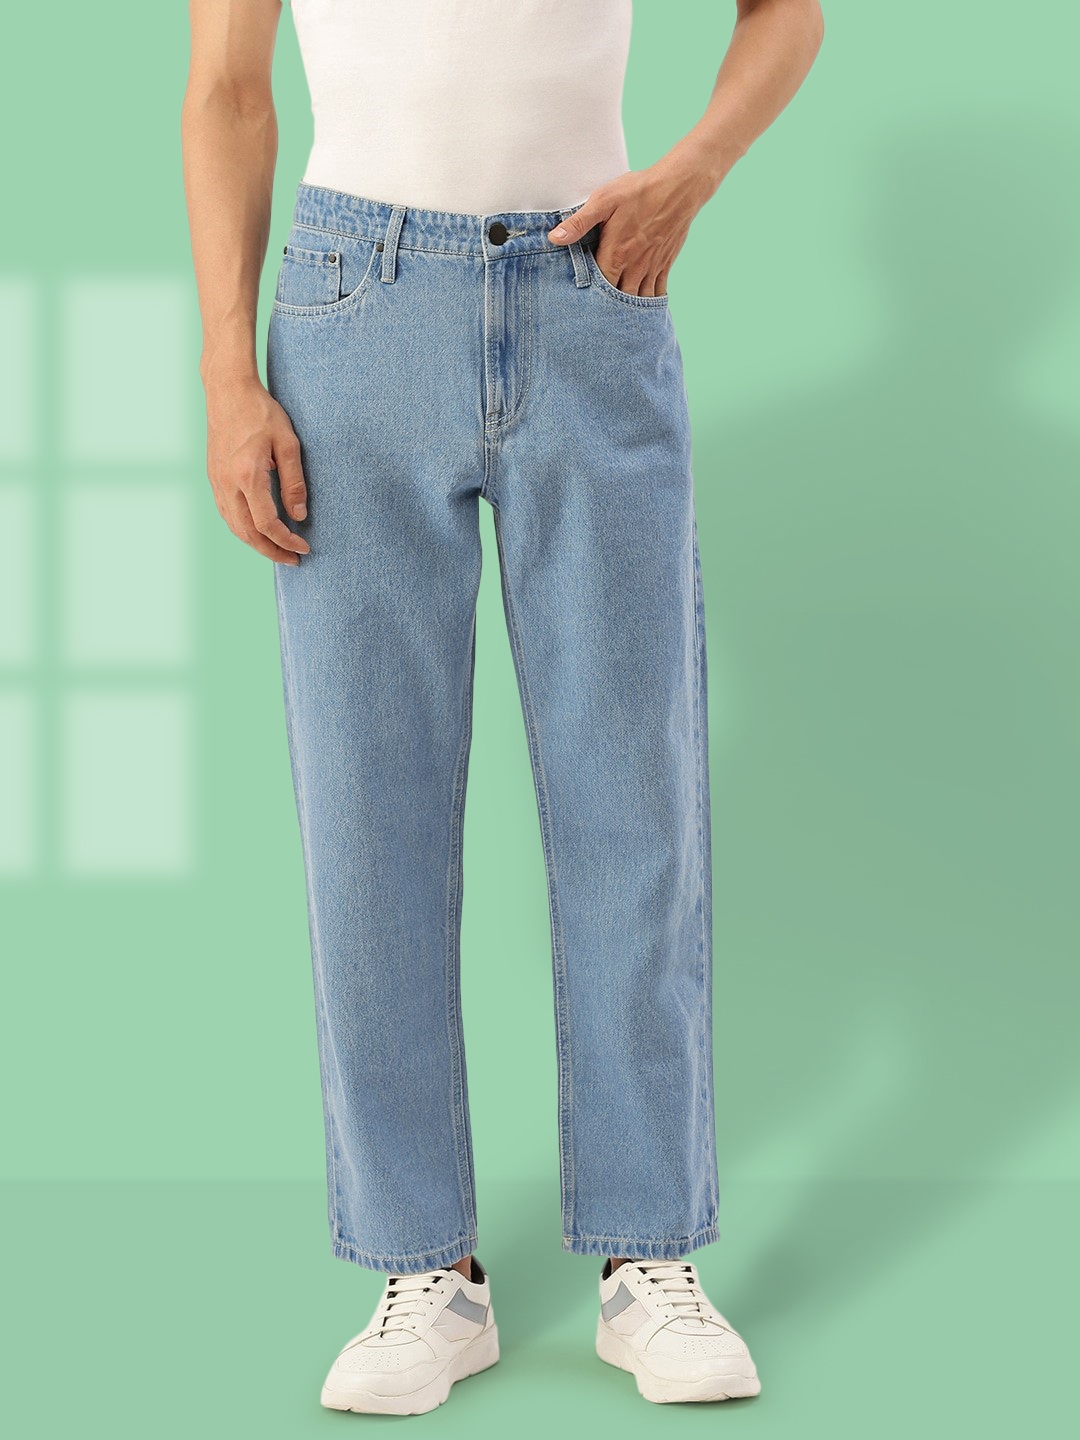 Buy Bene Kleed Men Relaxed Fit Jeans - Jeans for Men 23198762